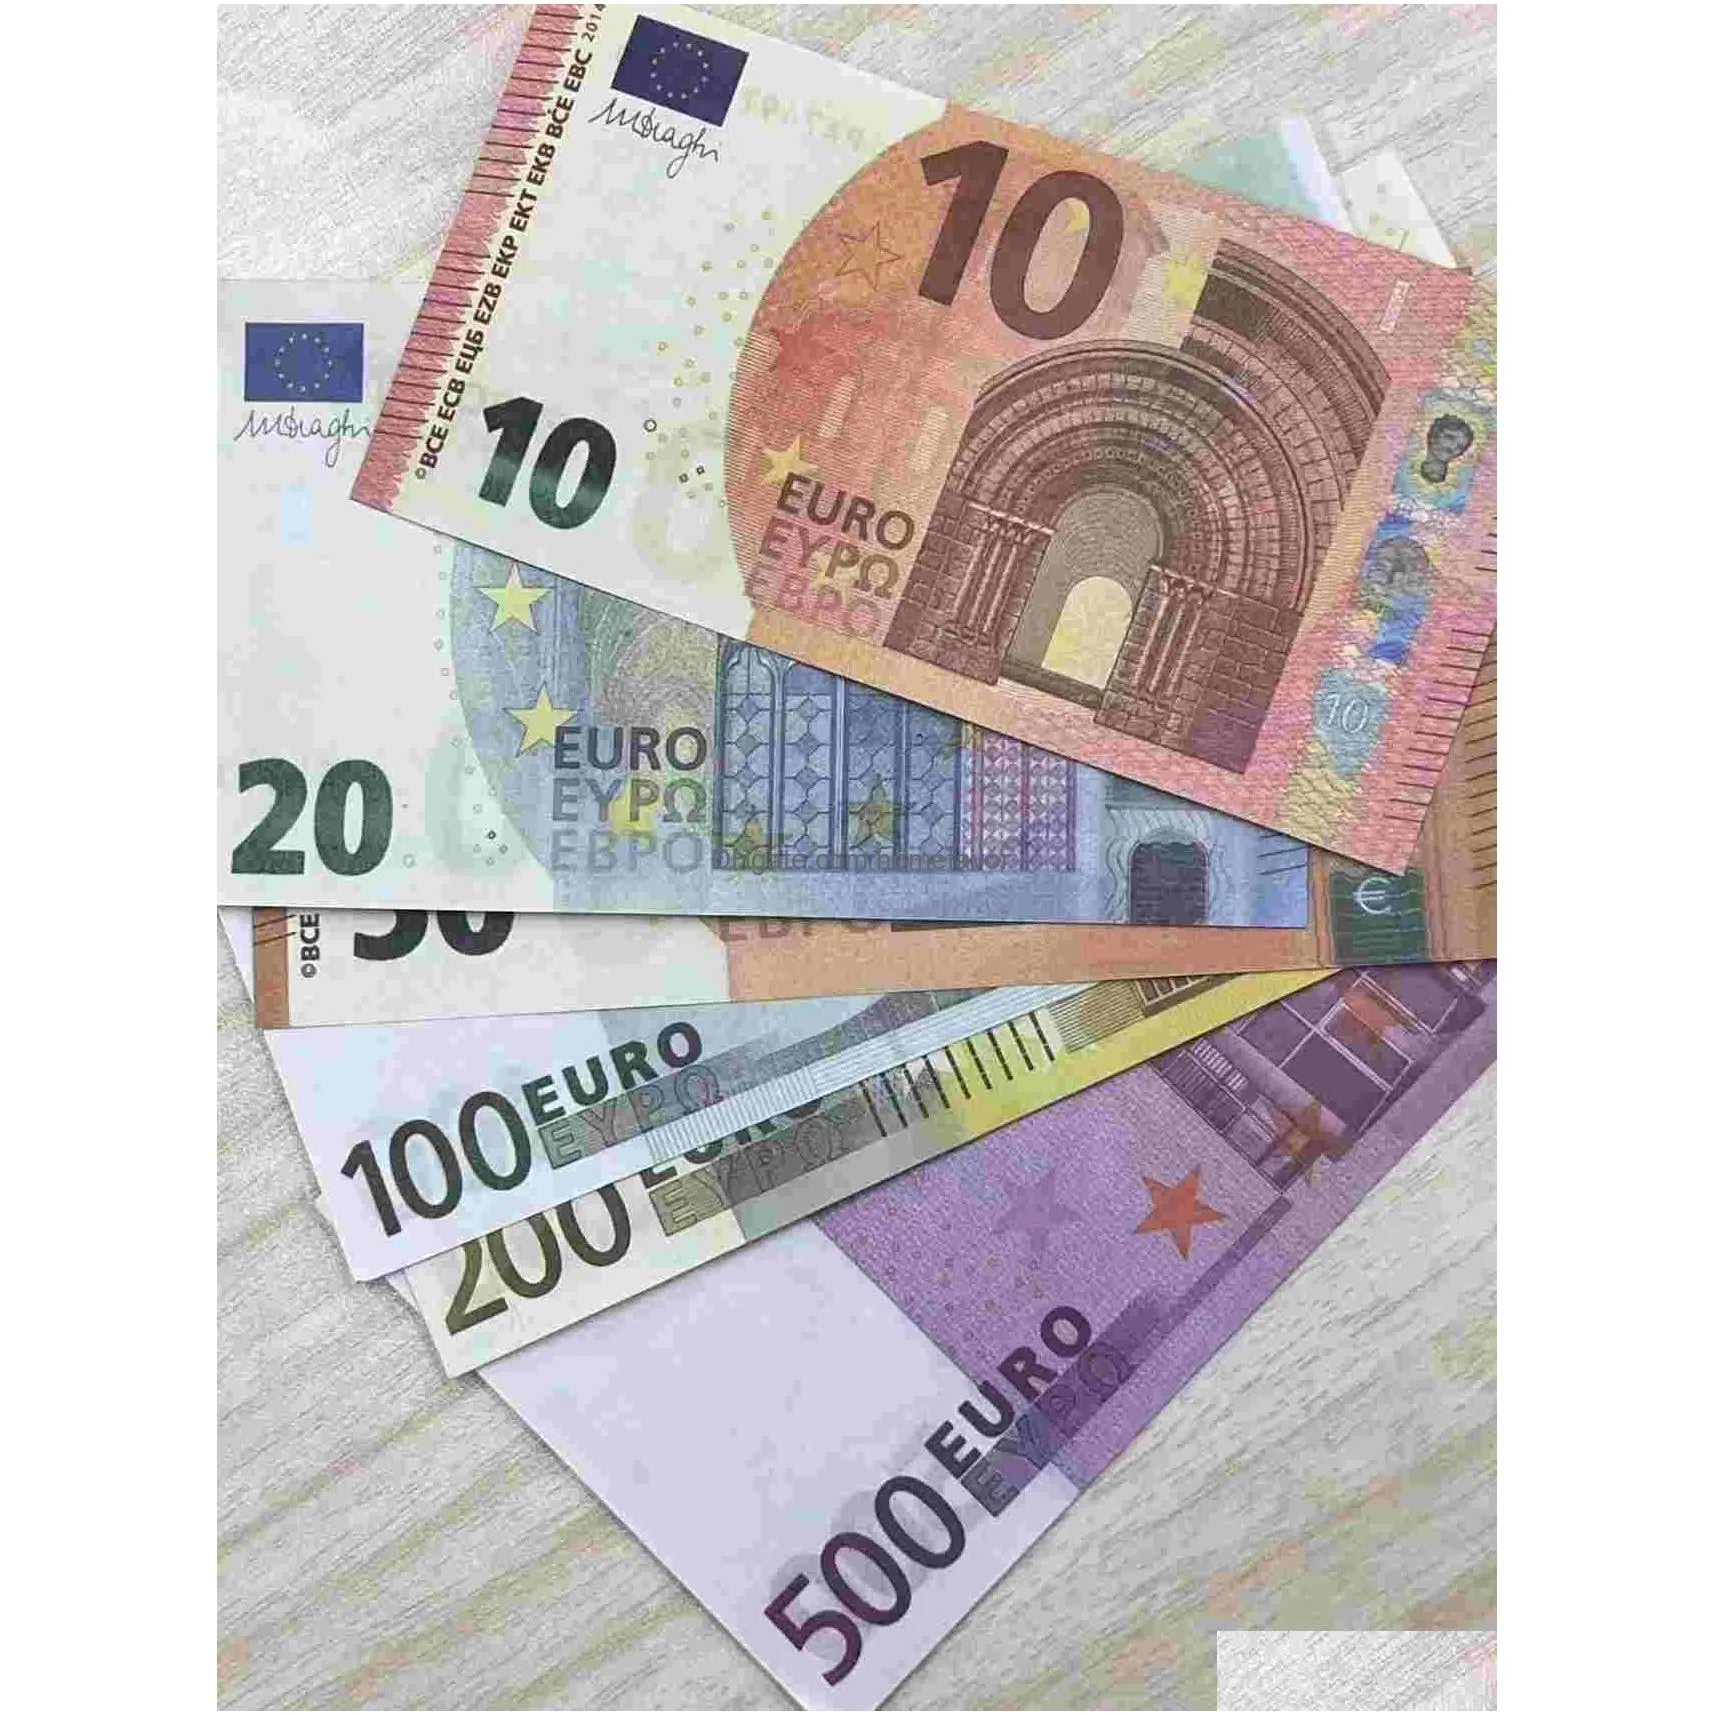 copy money actual 12 size fake faux billet banknote 10 20 50 100 200 us dollar euros pound english banknotes realistic toy bar p